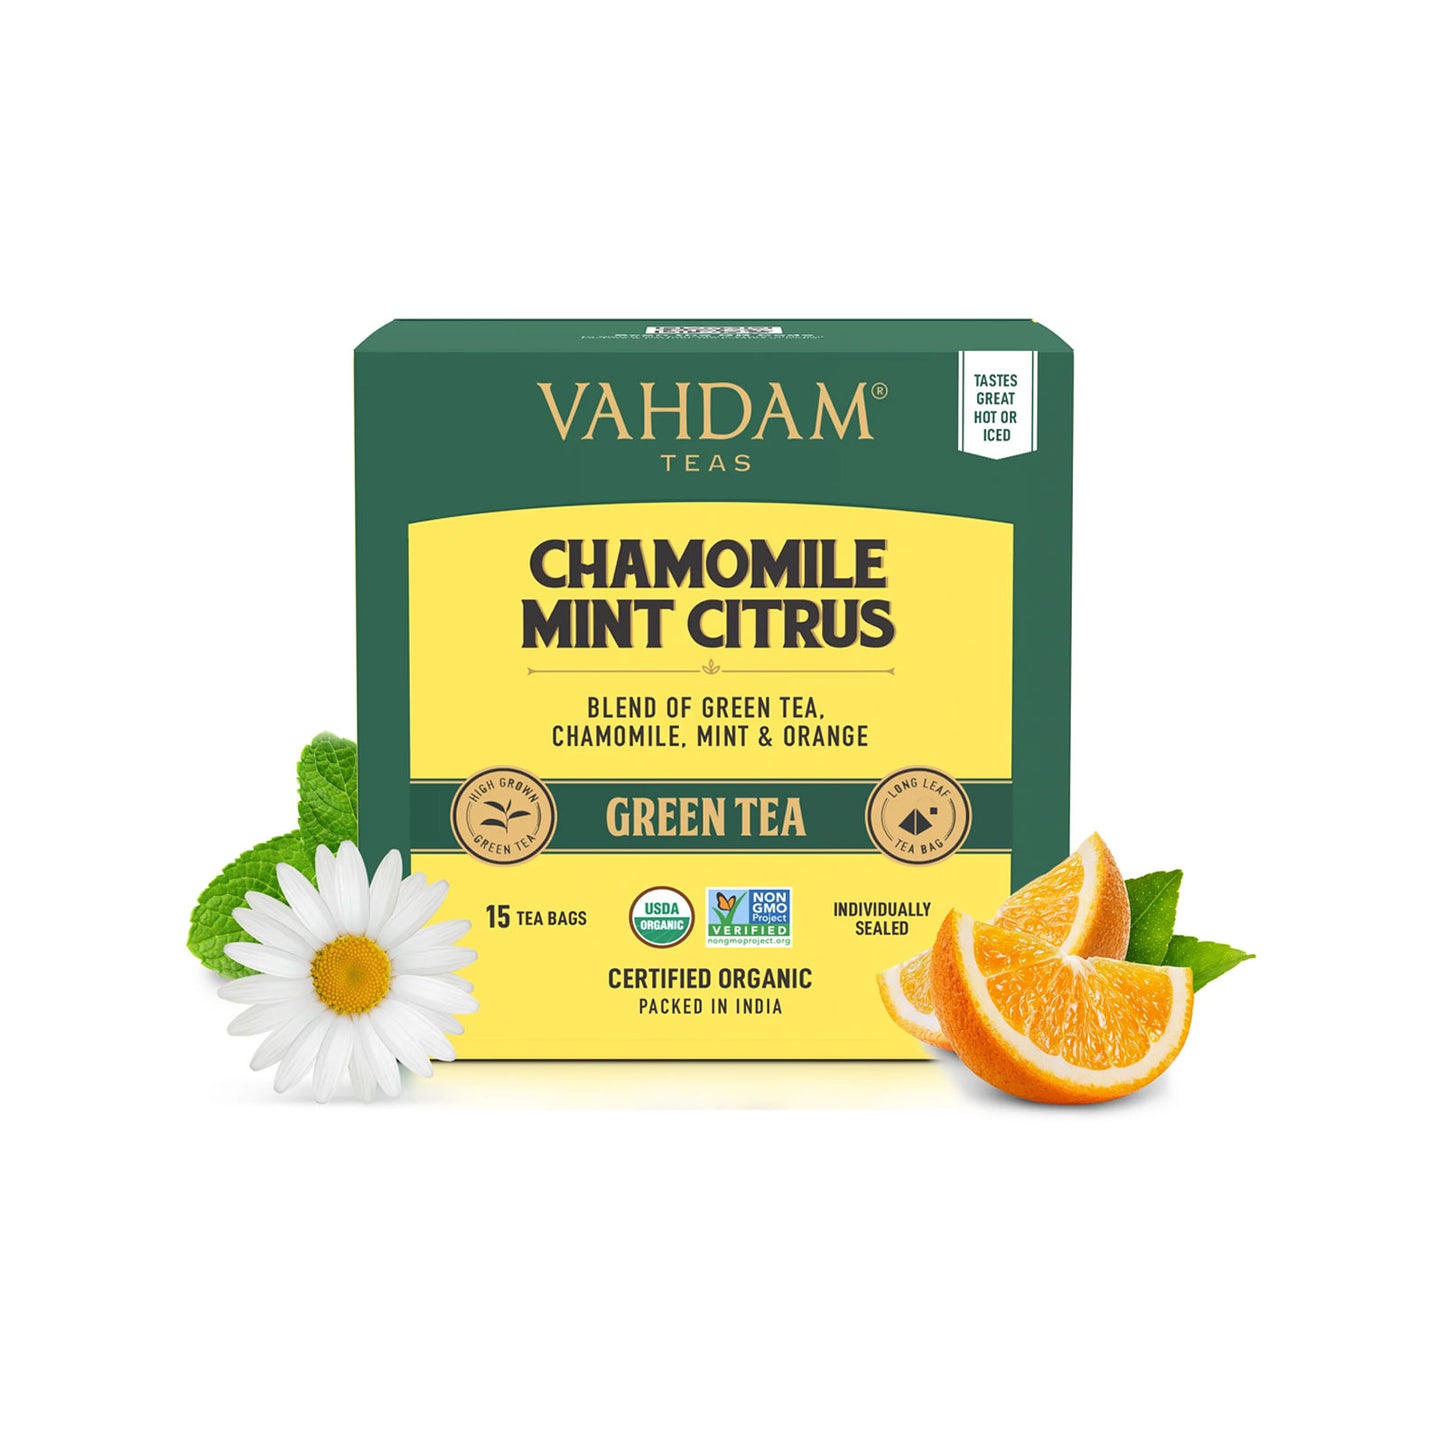 Vahdam Teas Chamomile Mint Citrus Green Tea Bags, 15 Sachets